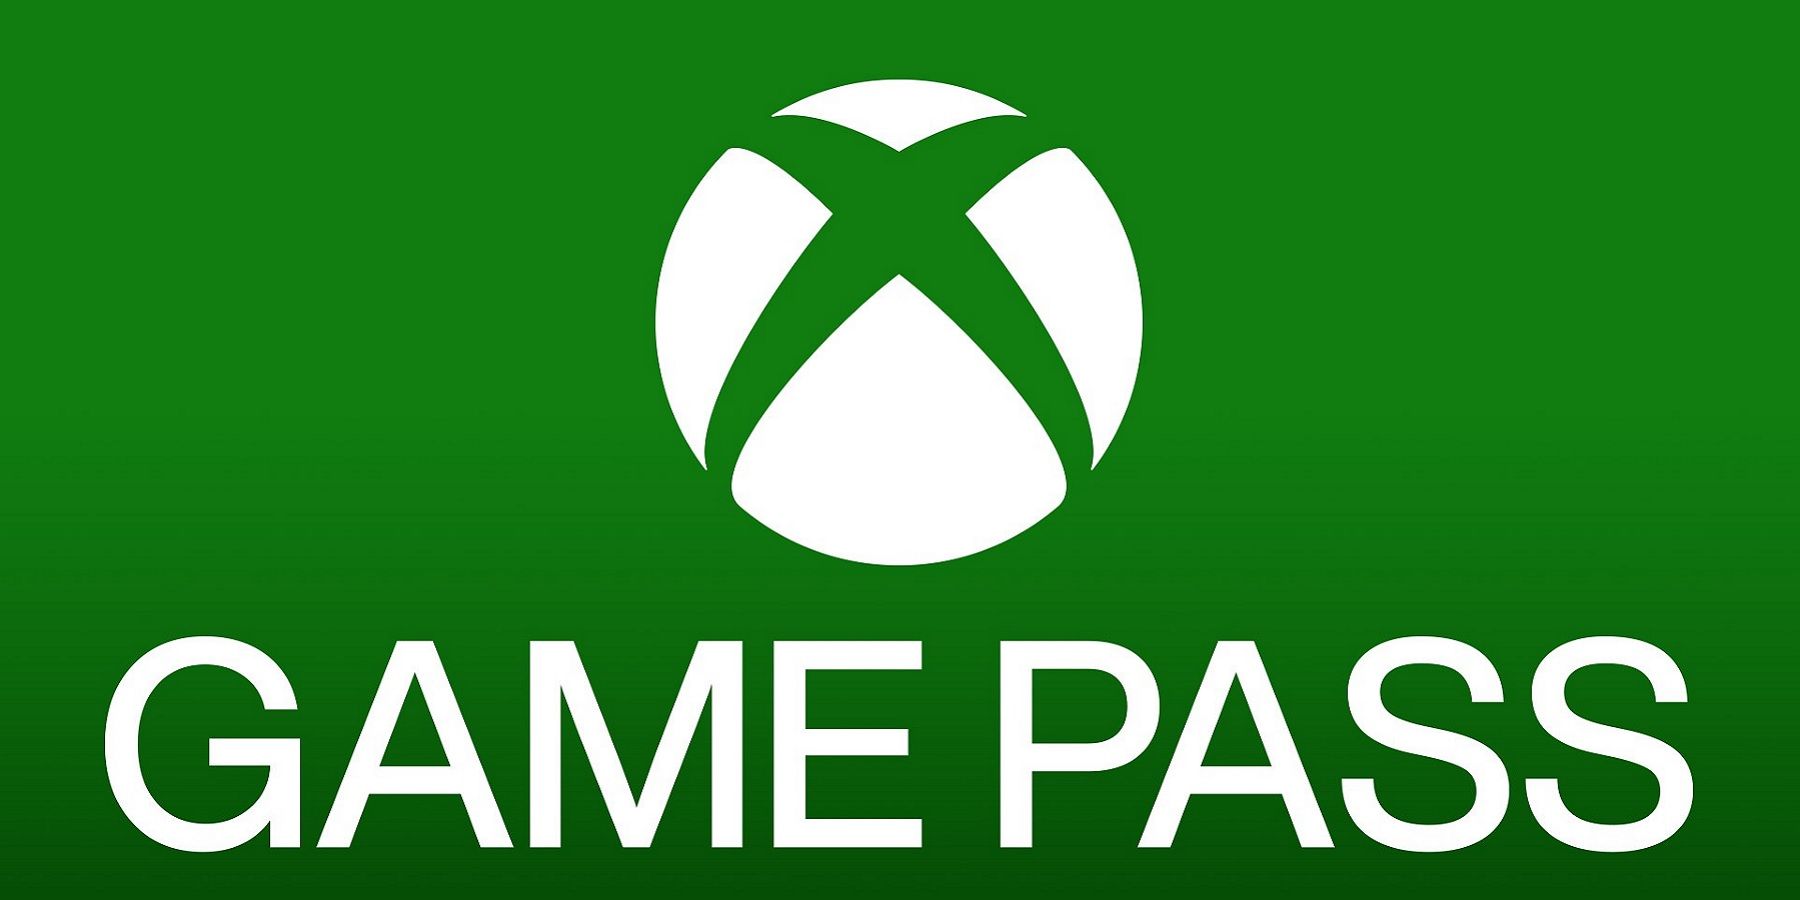 xbox-game-pass-logo-1